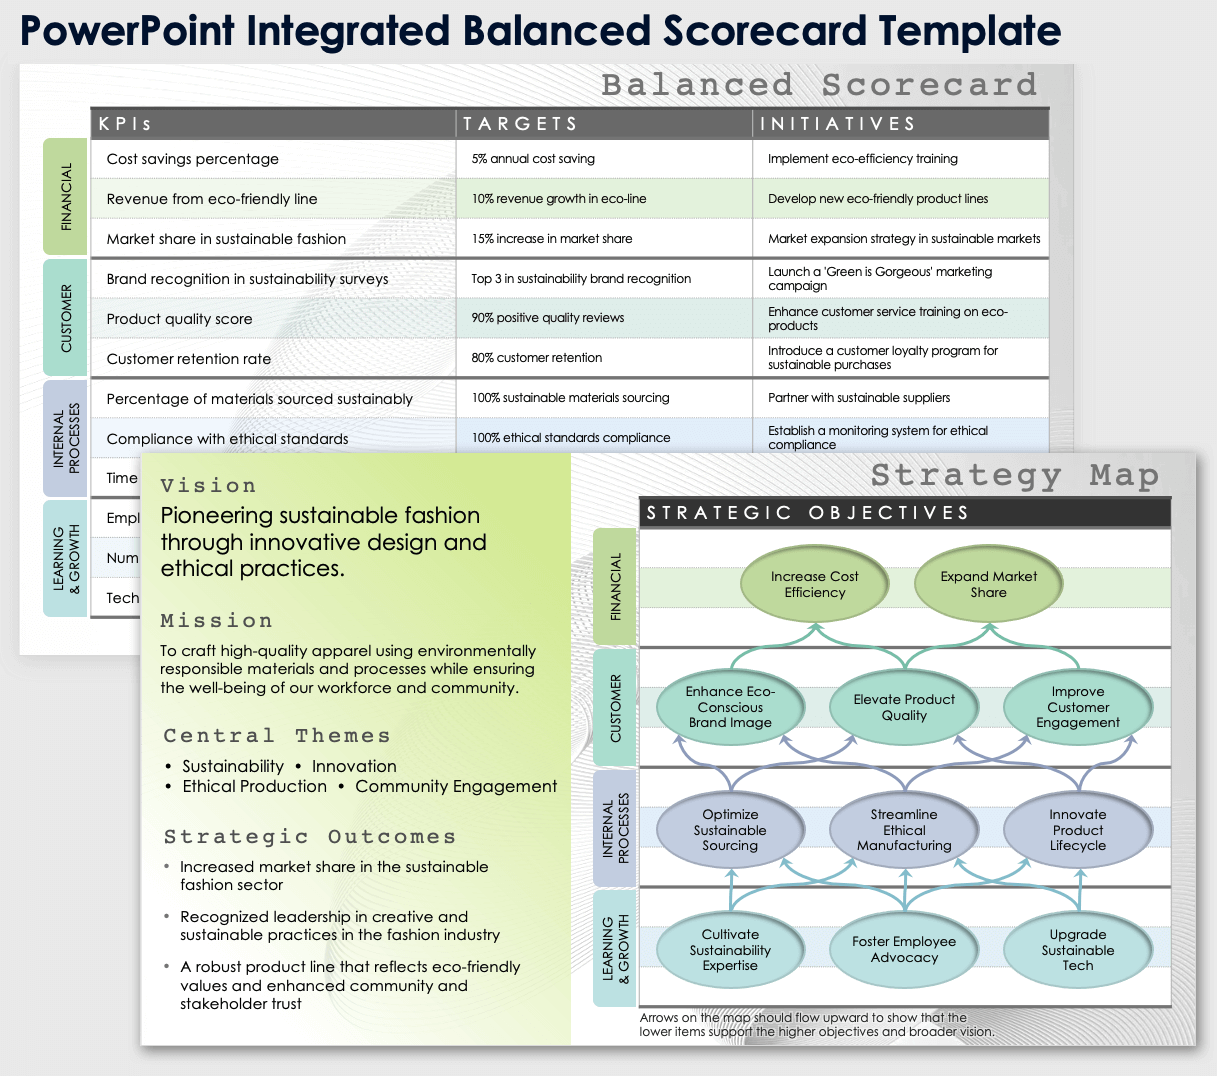 PowerPoint Integrated Balanced Scorecard Template